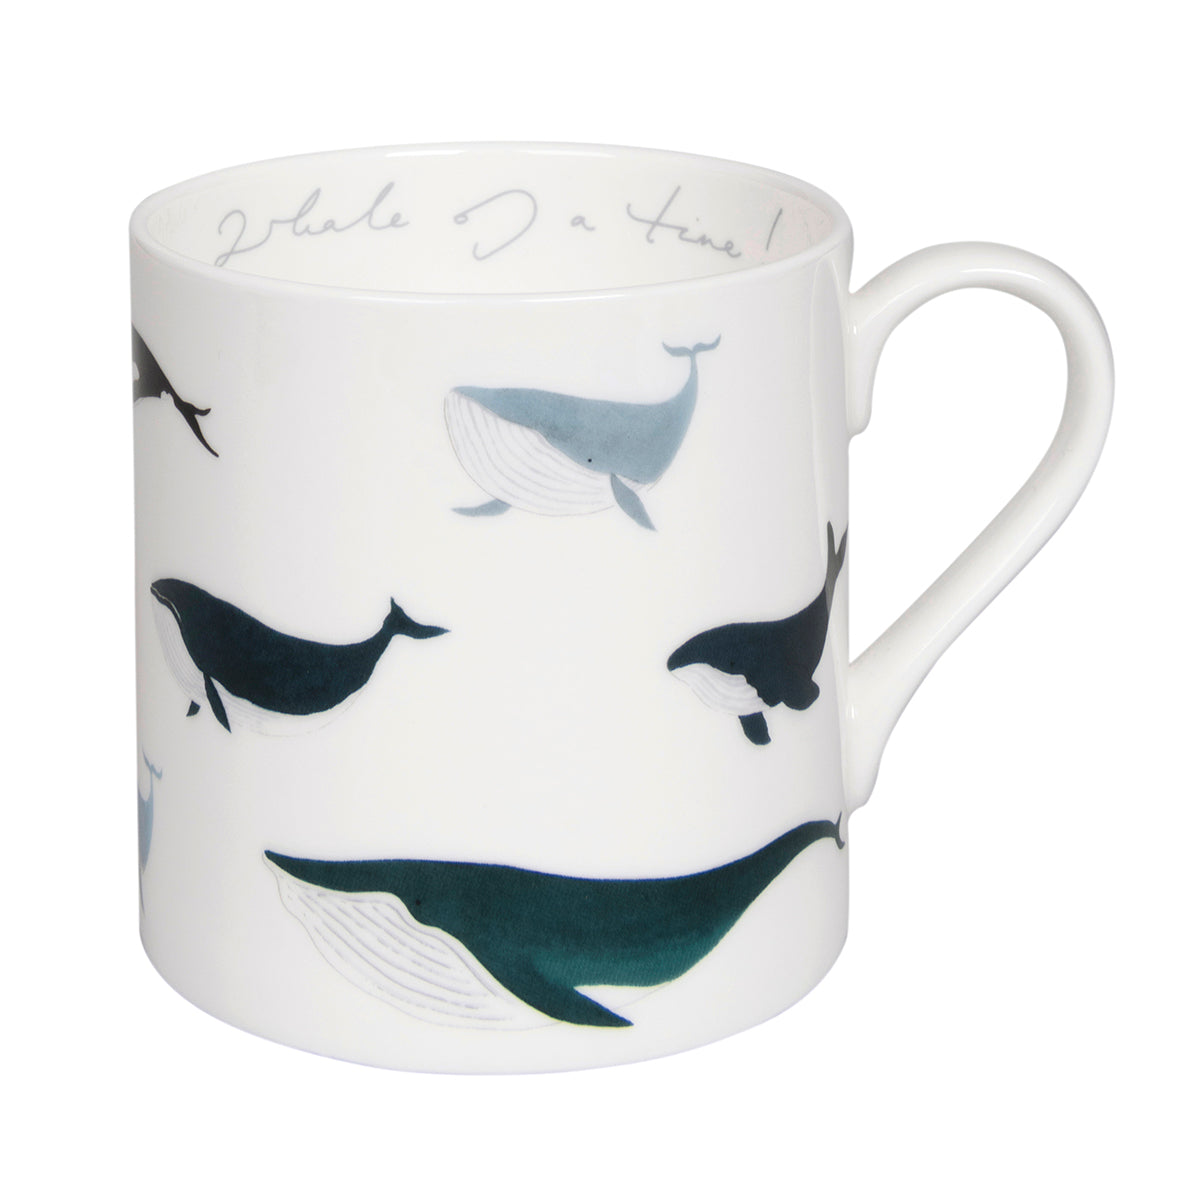 Fine bone china mug in Sophie Allport's Whales design